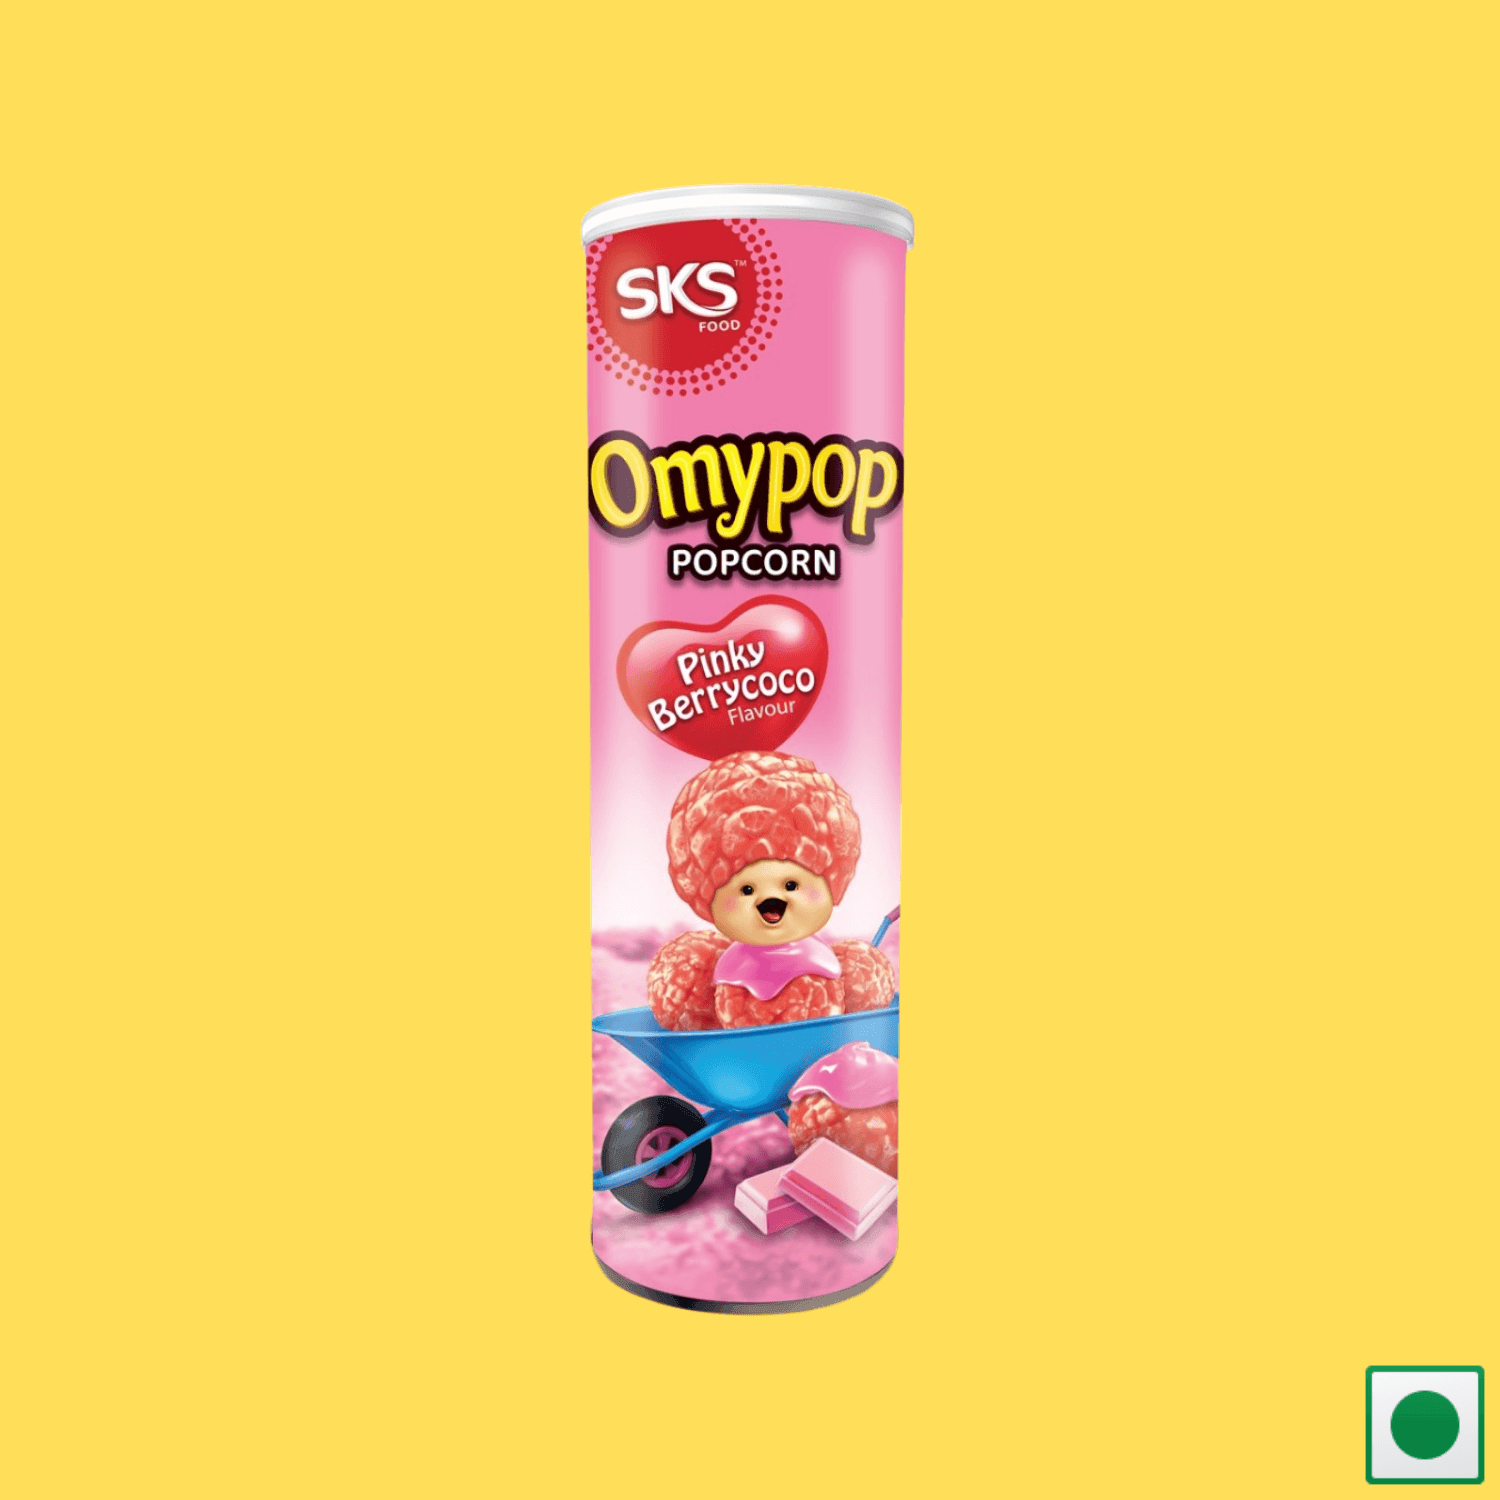 Omypop Popcorn - Pinky Berrycoco, 85g (IMPORTED) - Super 7 Mart